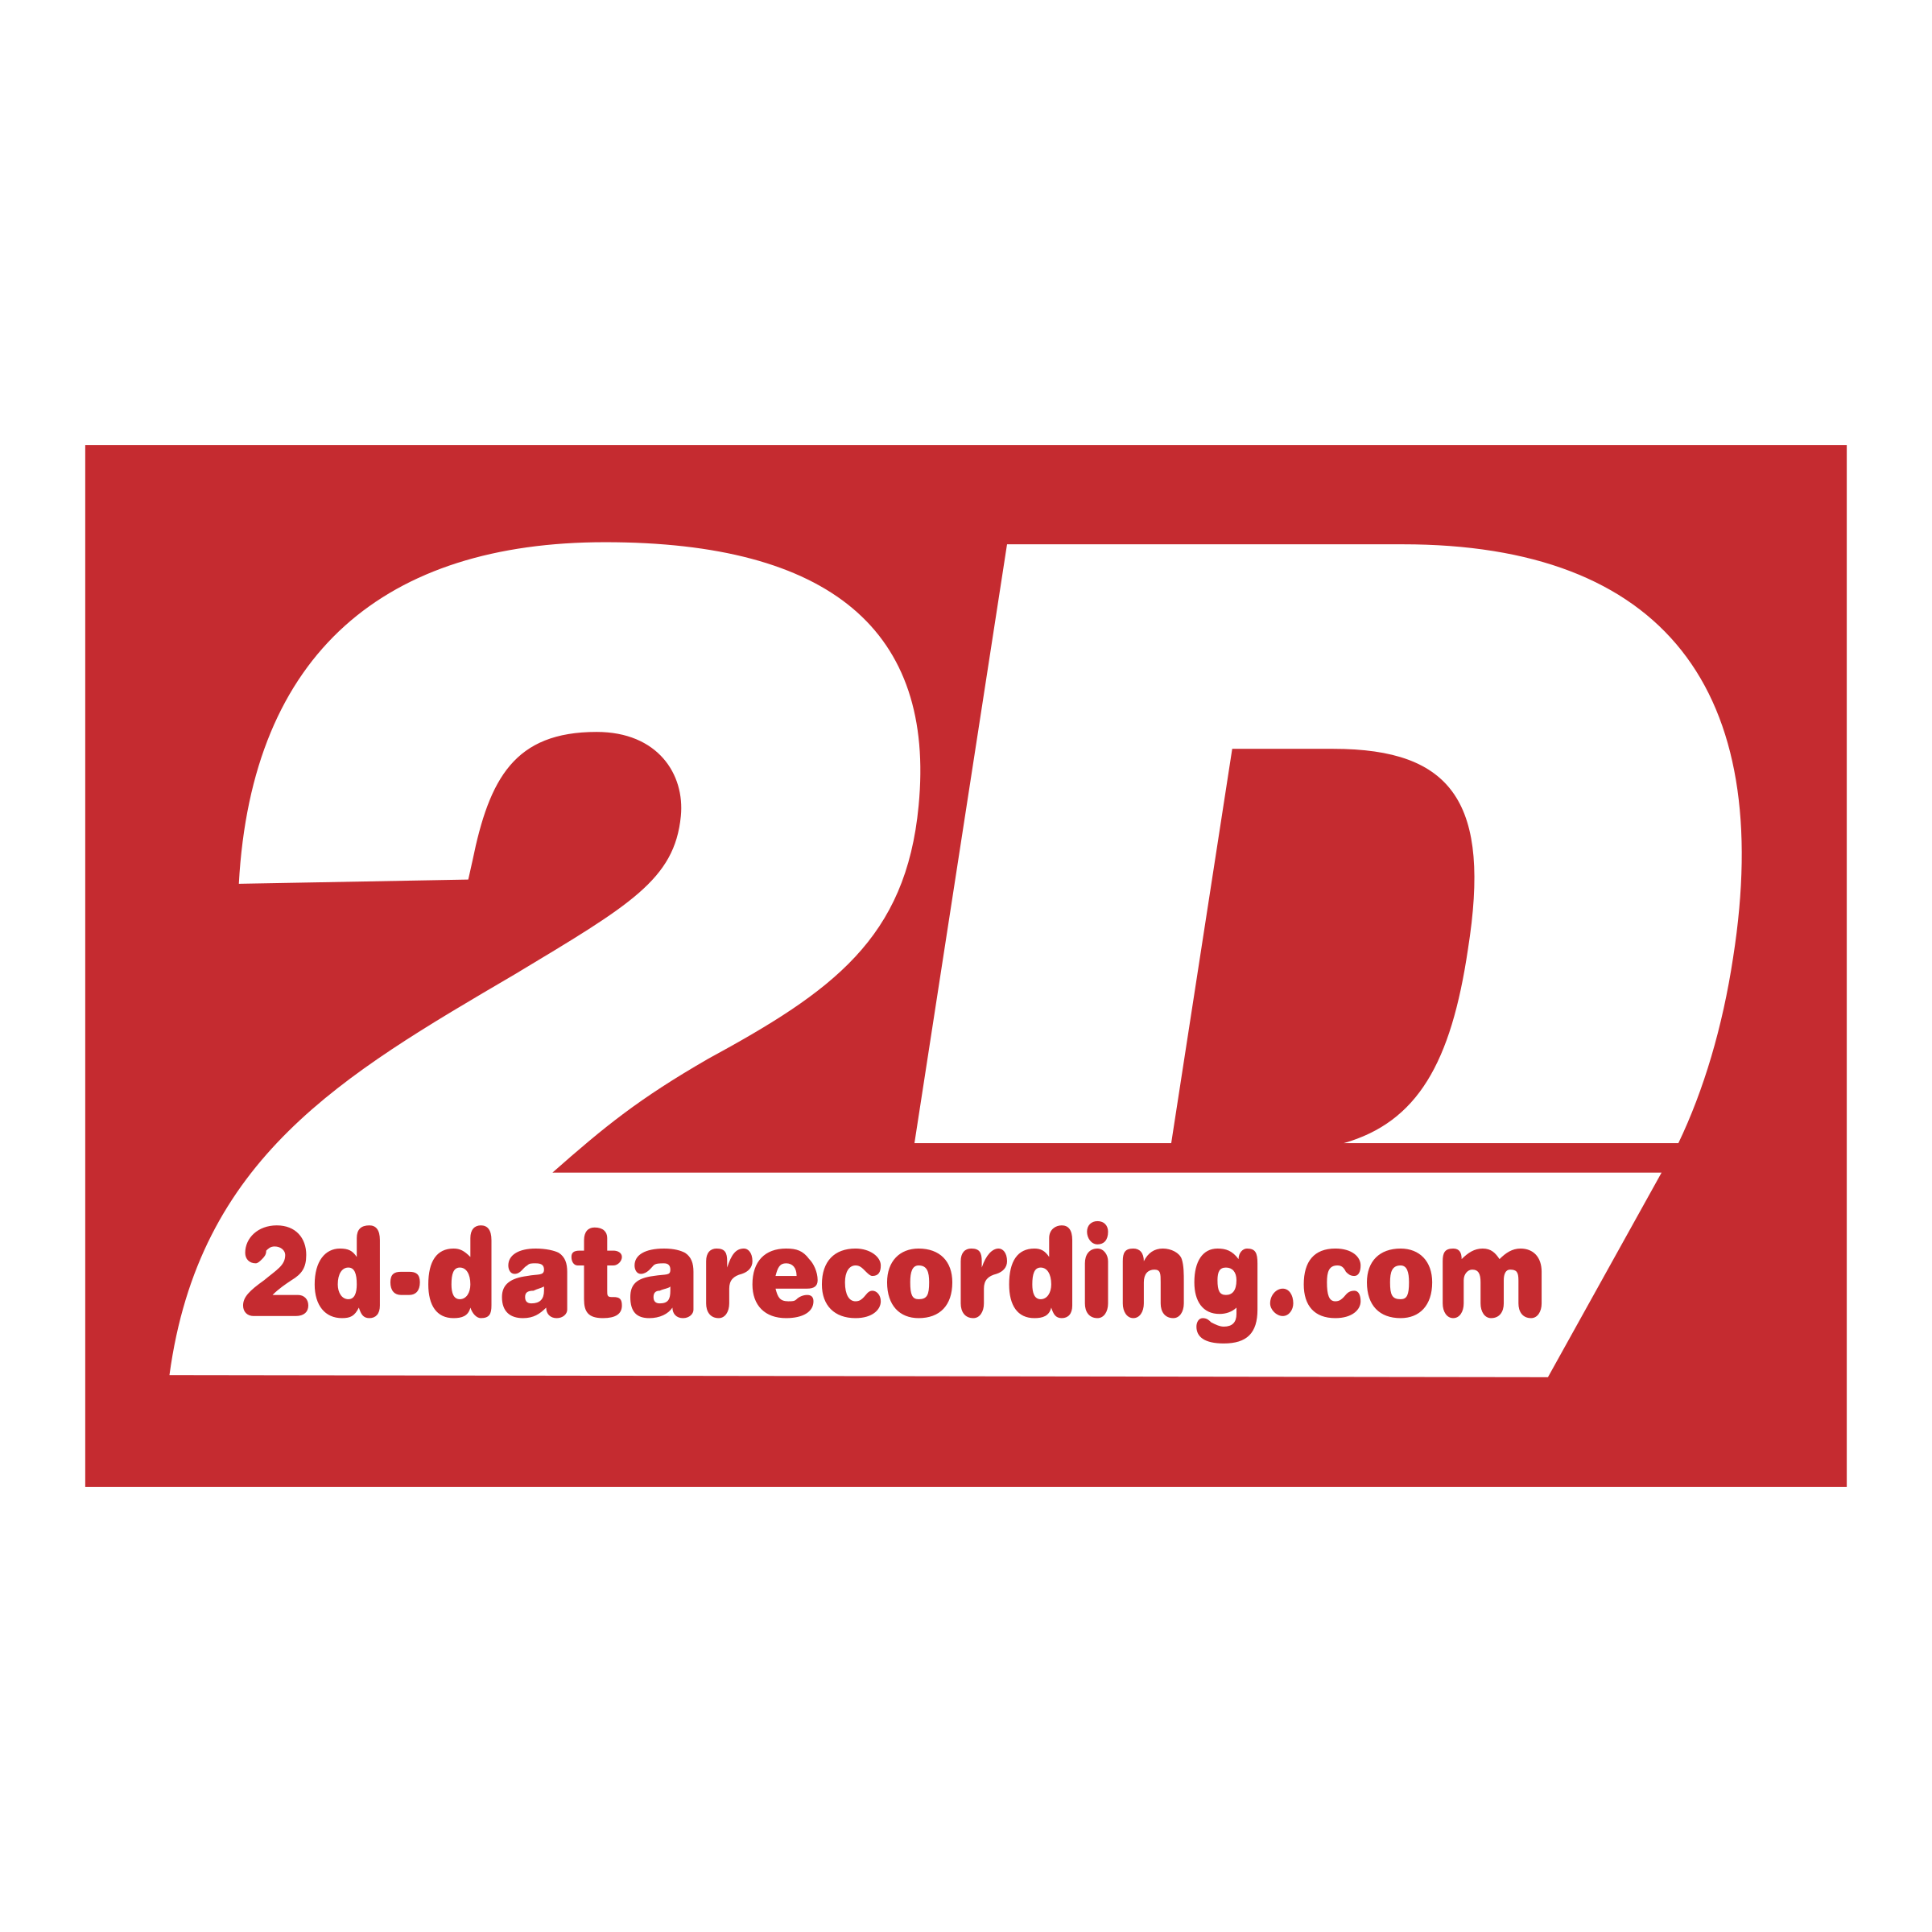 2D Logo - 2D Logo PNG Transparent & SVG Vector - Freebie Supply